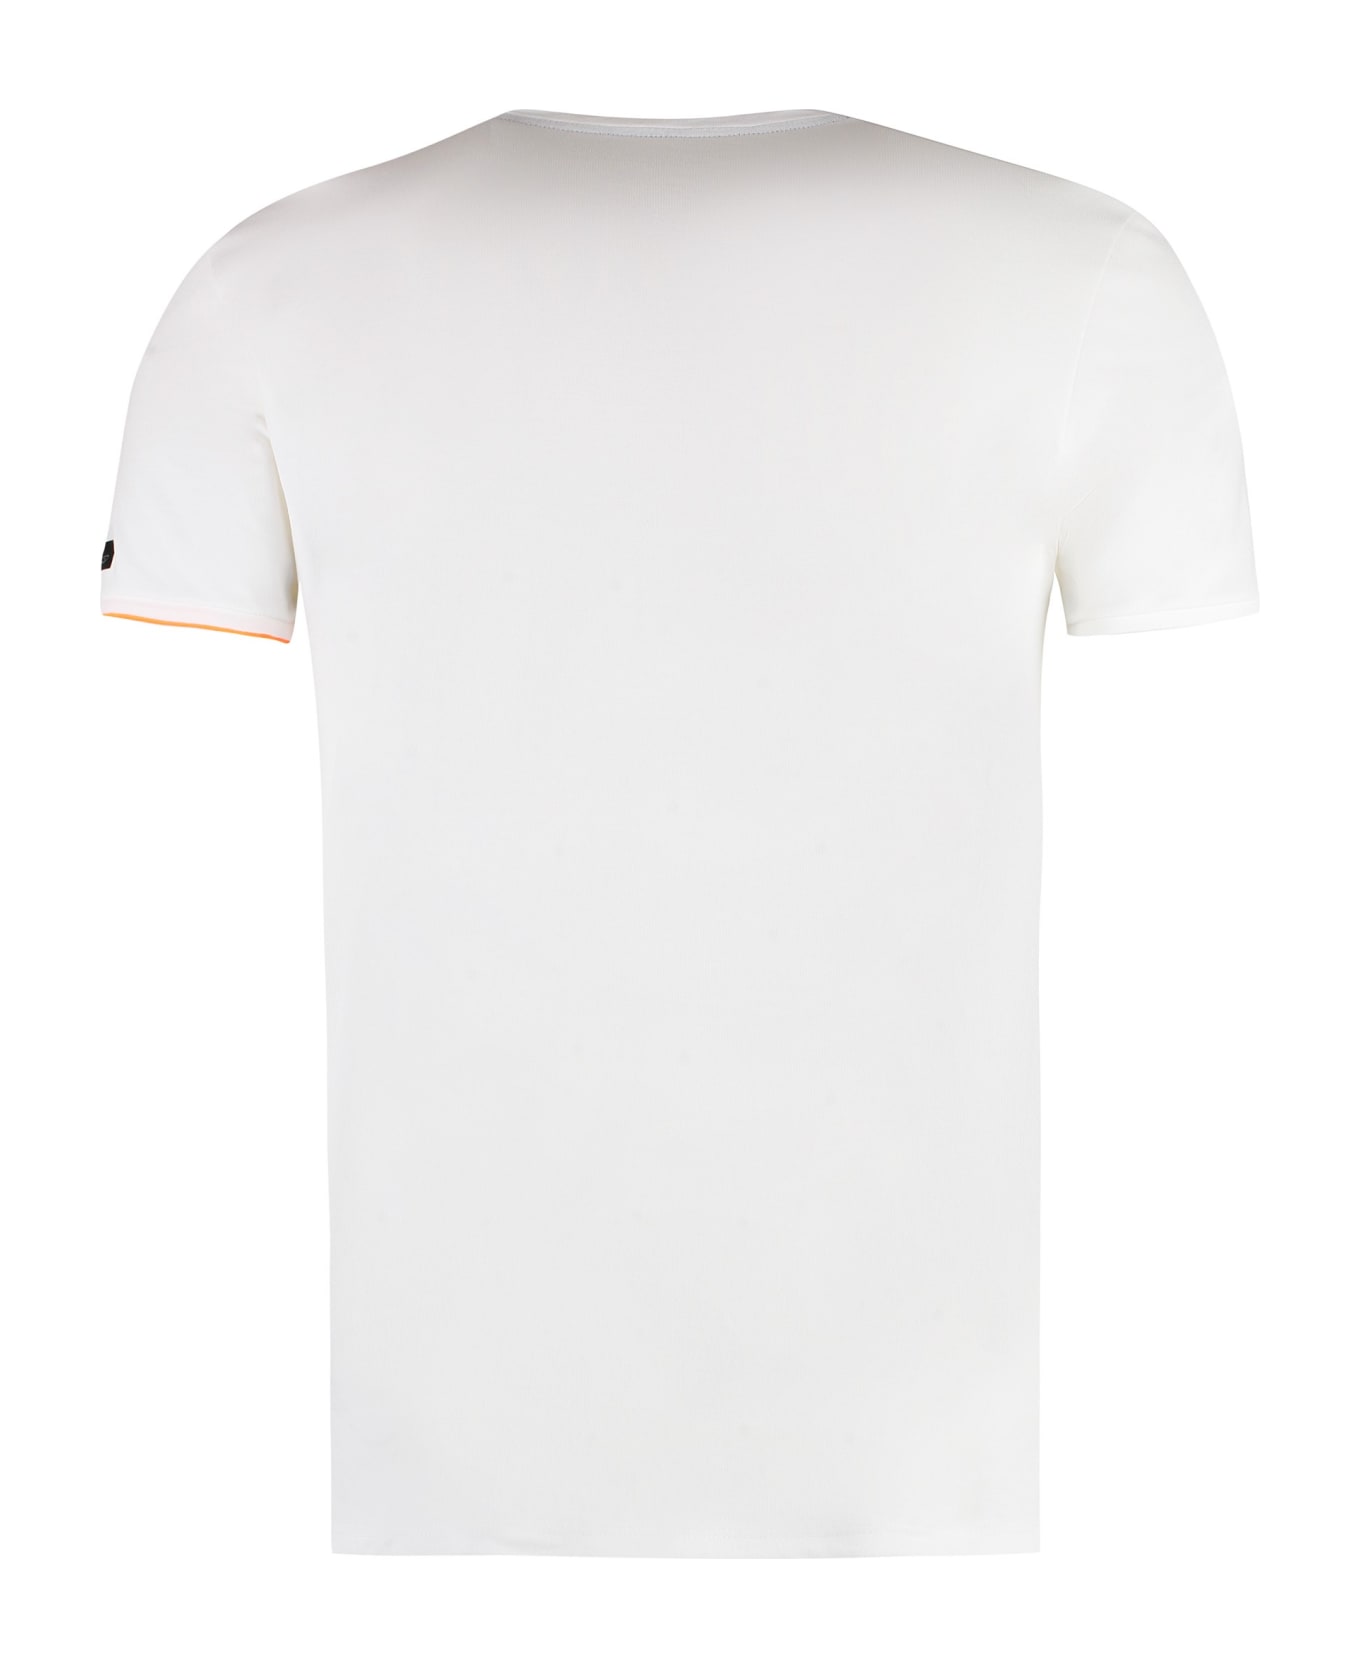 RRD - Roberto Ricci Design Cotton Blend T-shirt - White